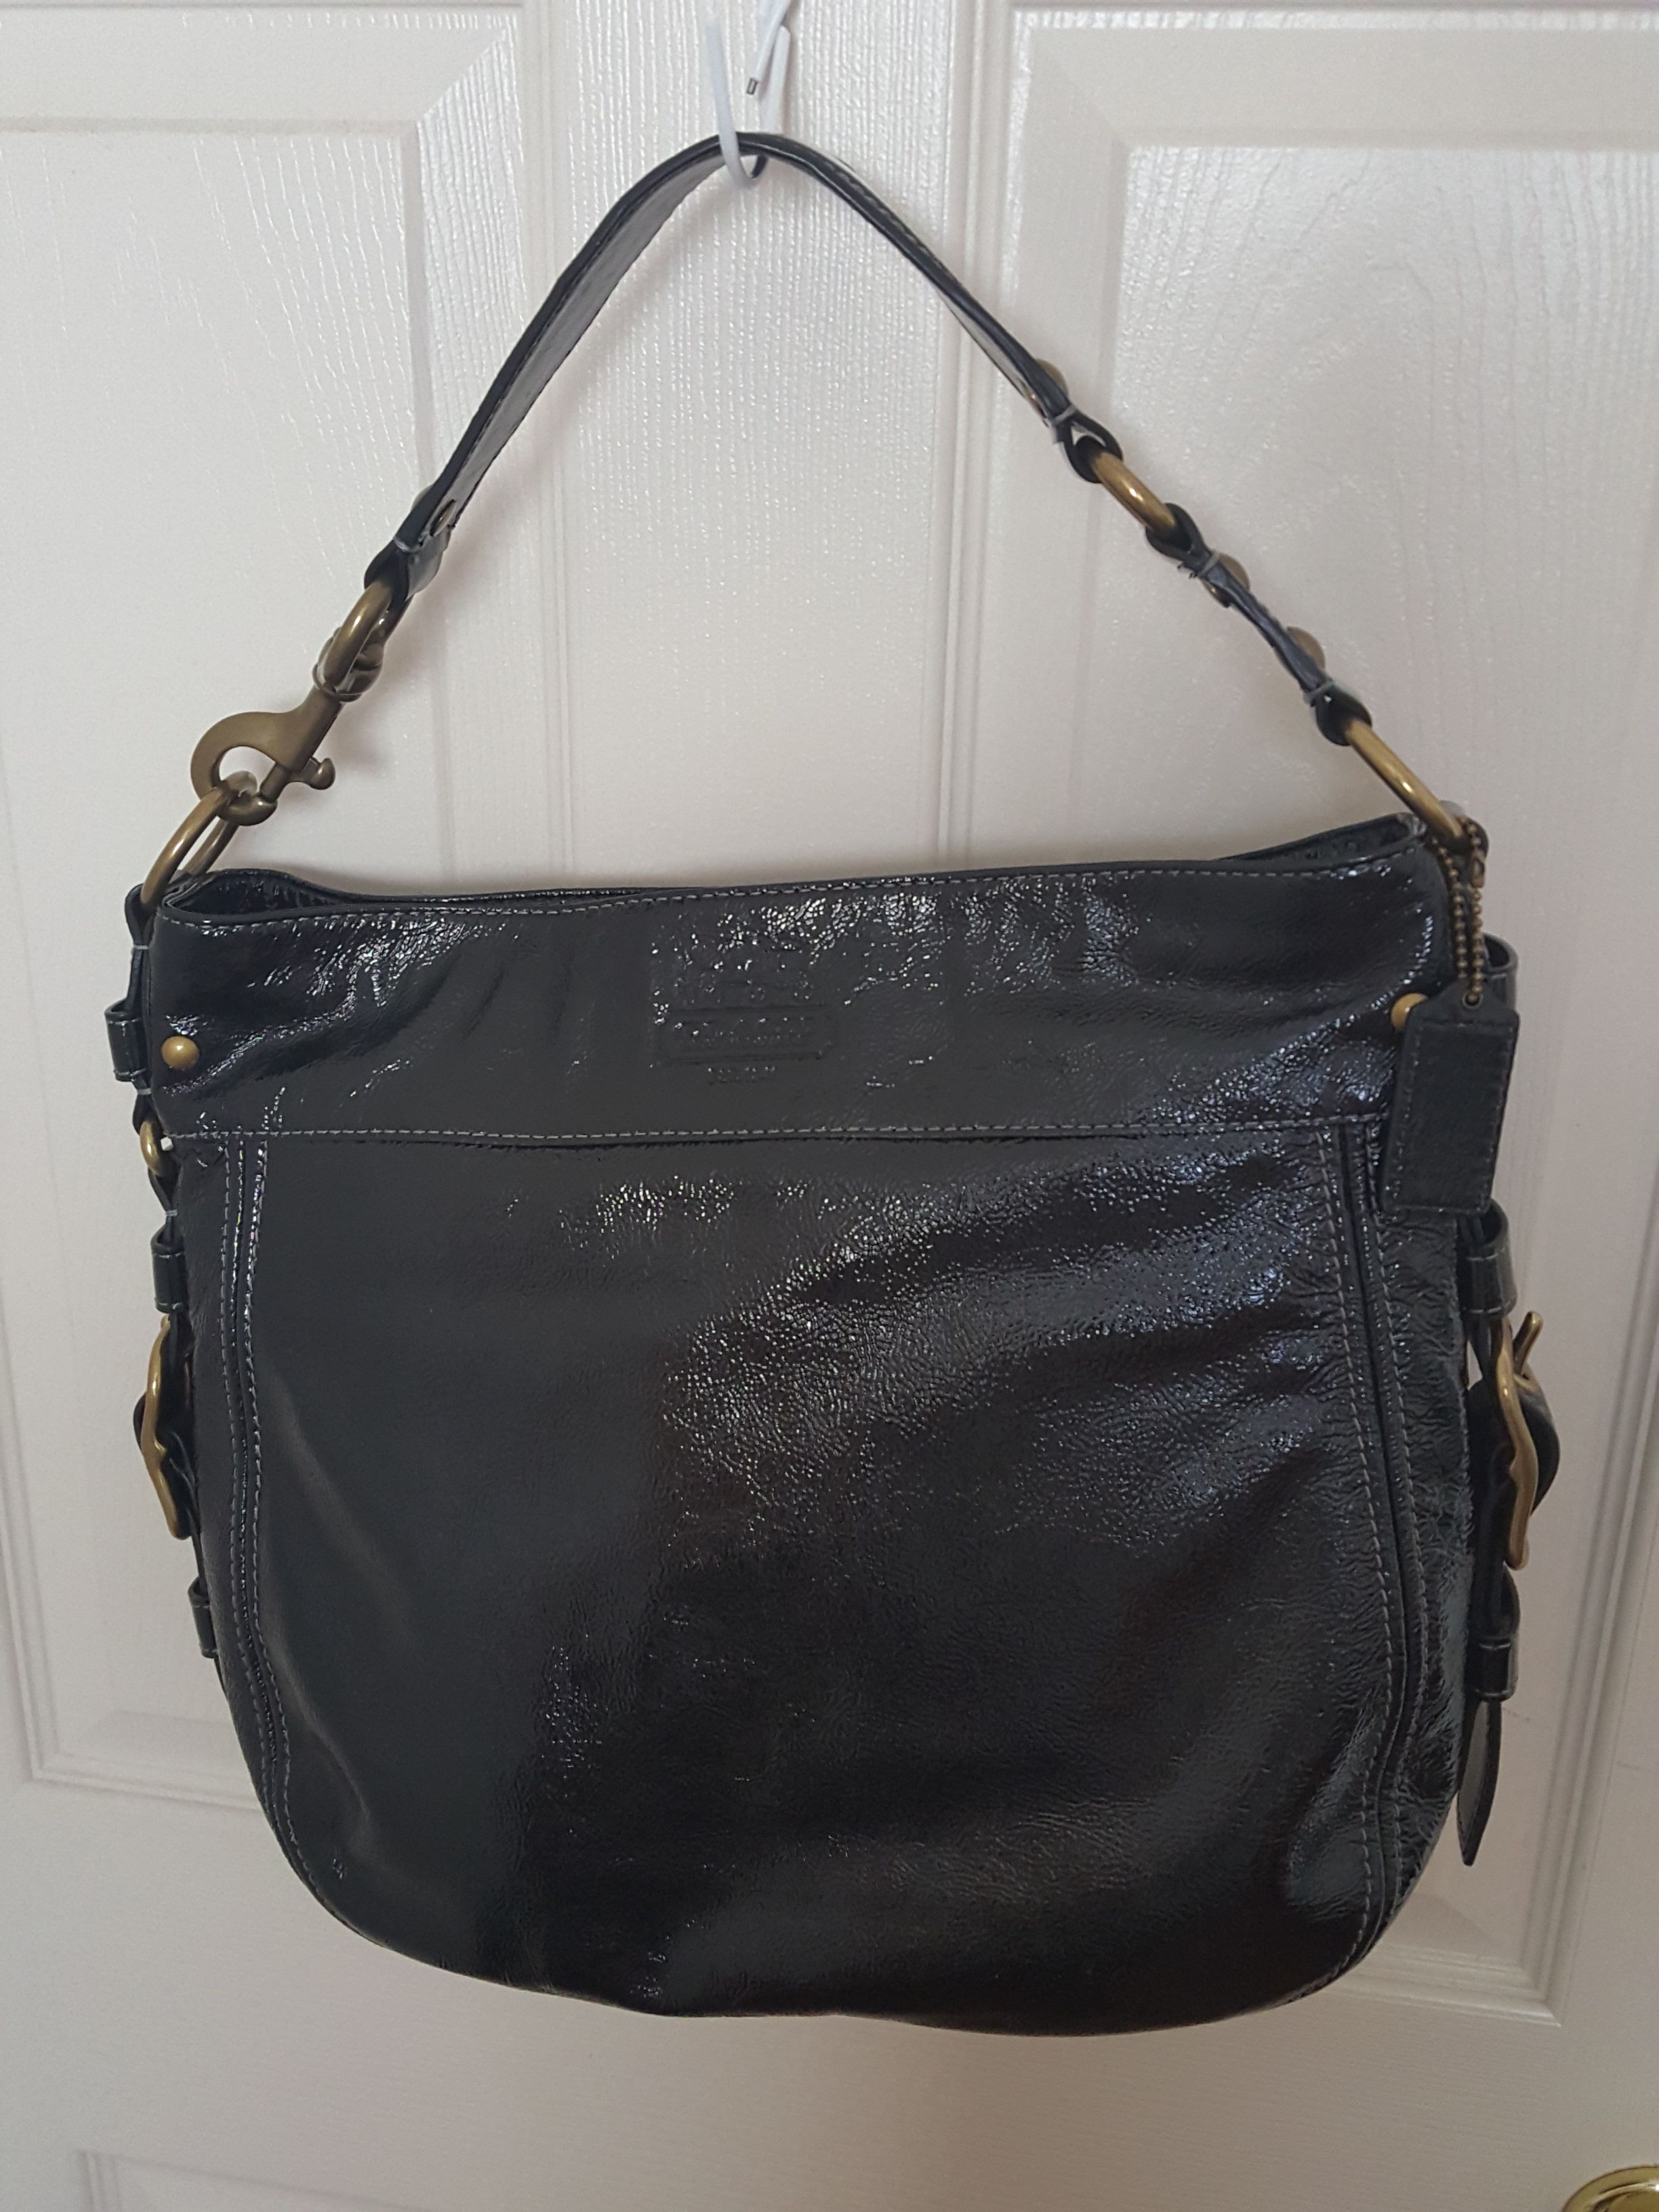 Coach Zoe Black Leather Hobo Bag E0873-12776 for Sale in Elk